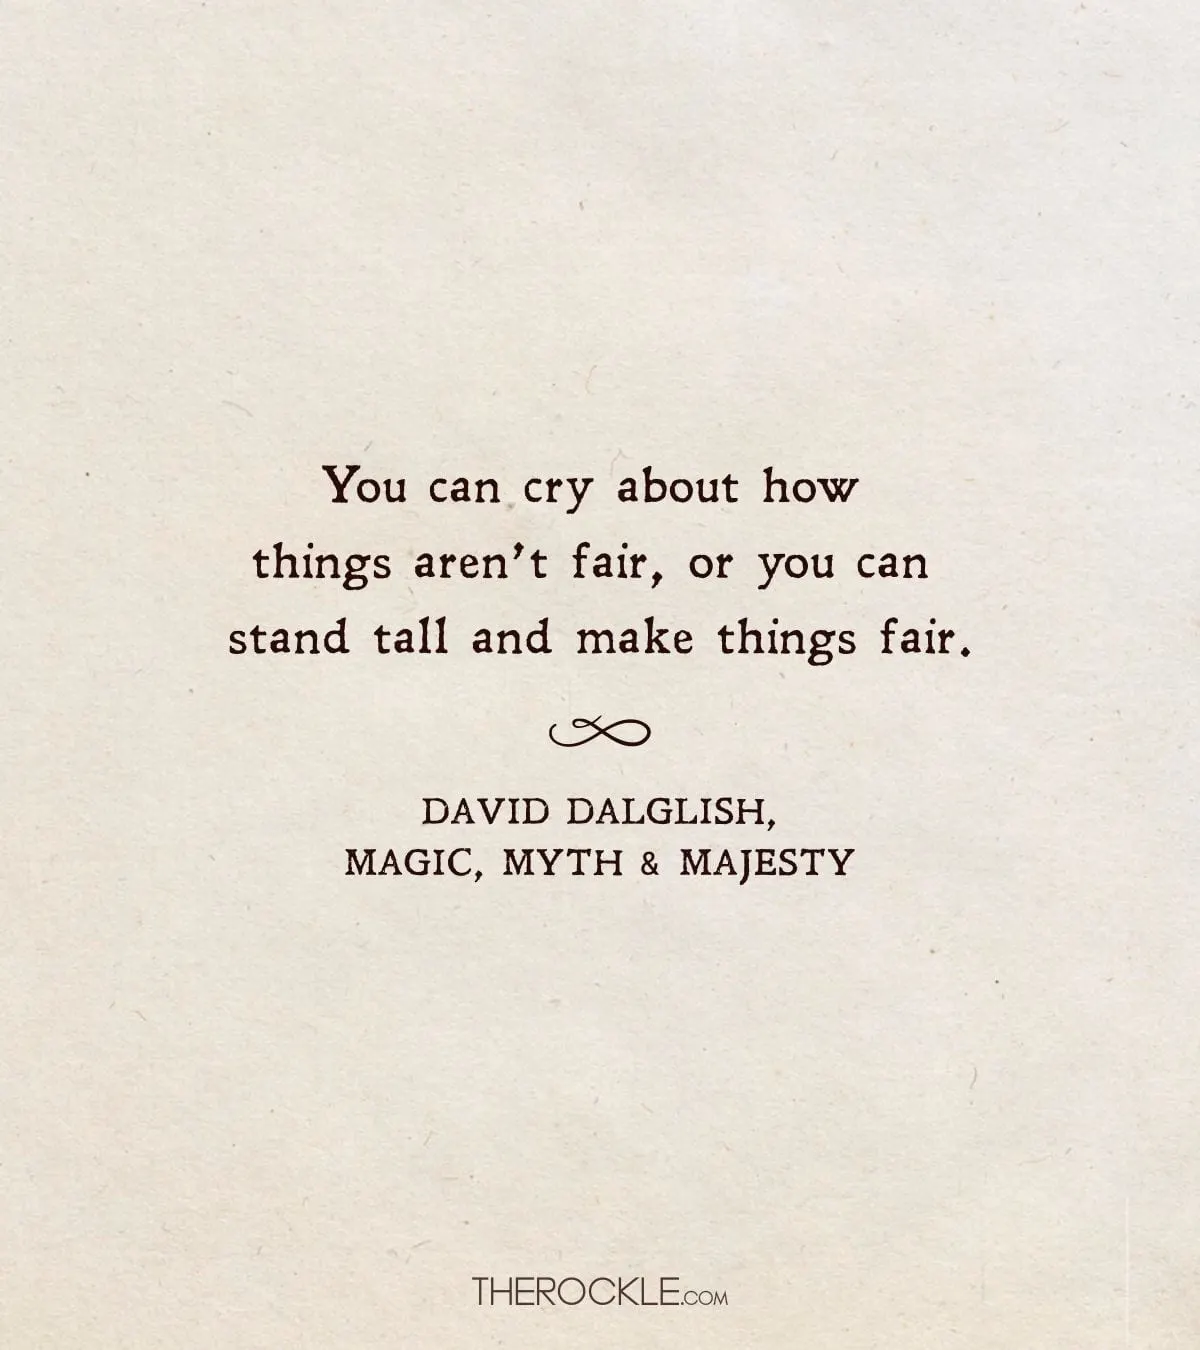 David Dalglish's quote about taking initiative